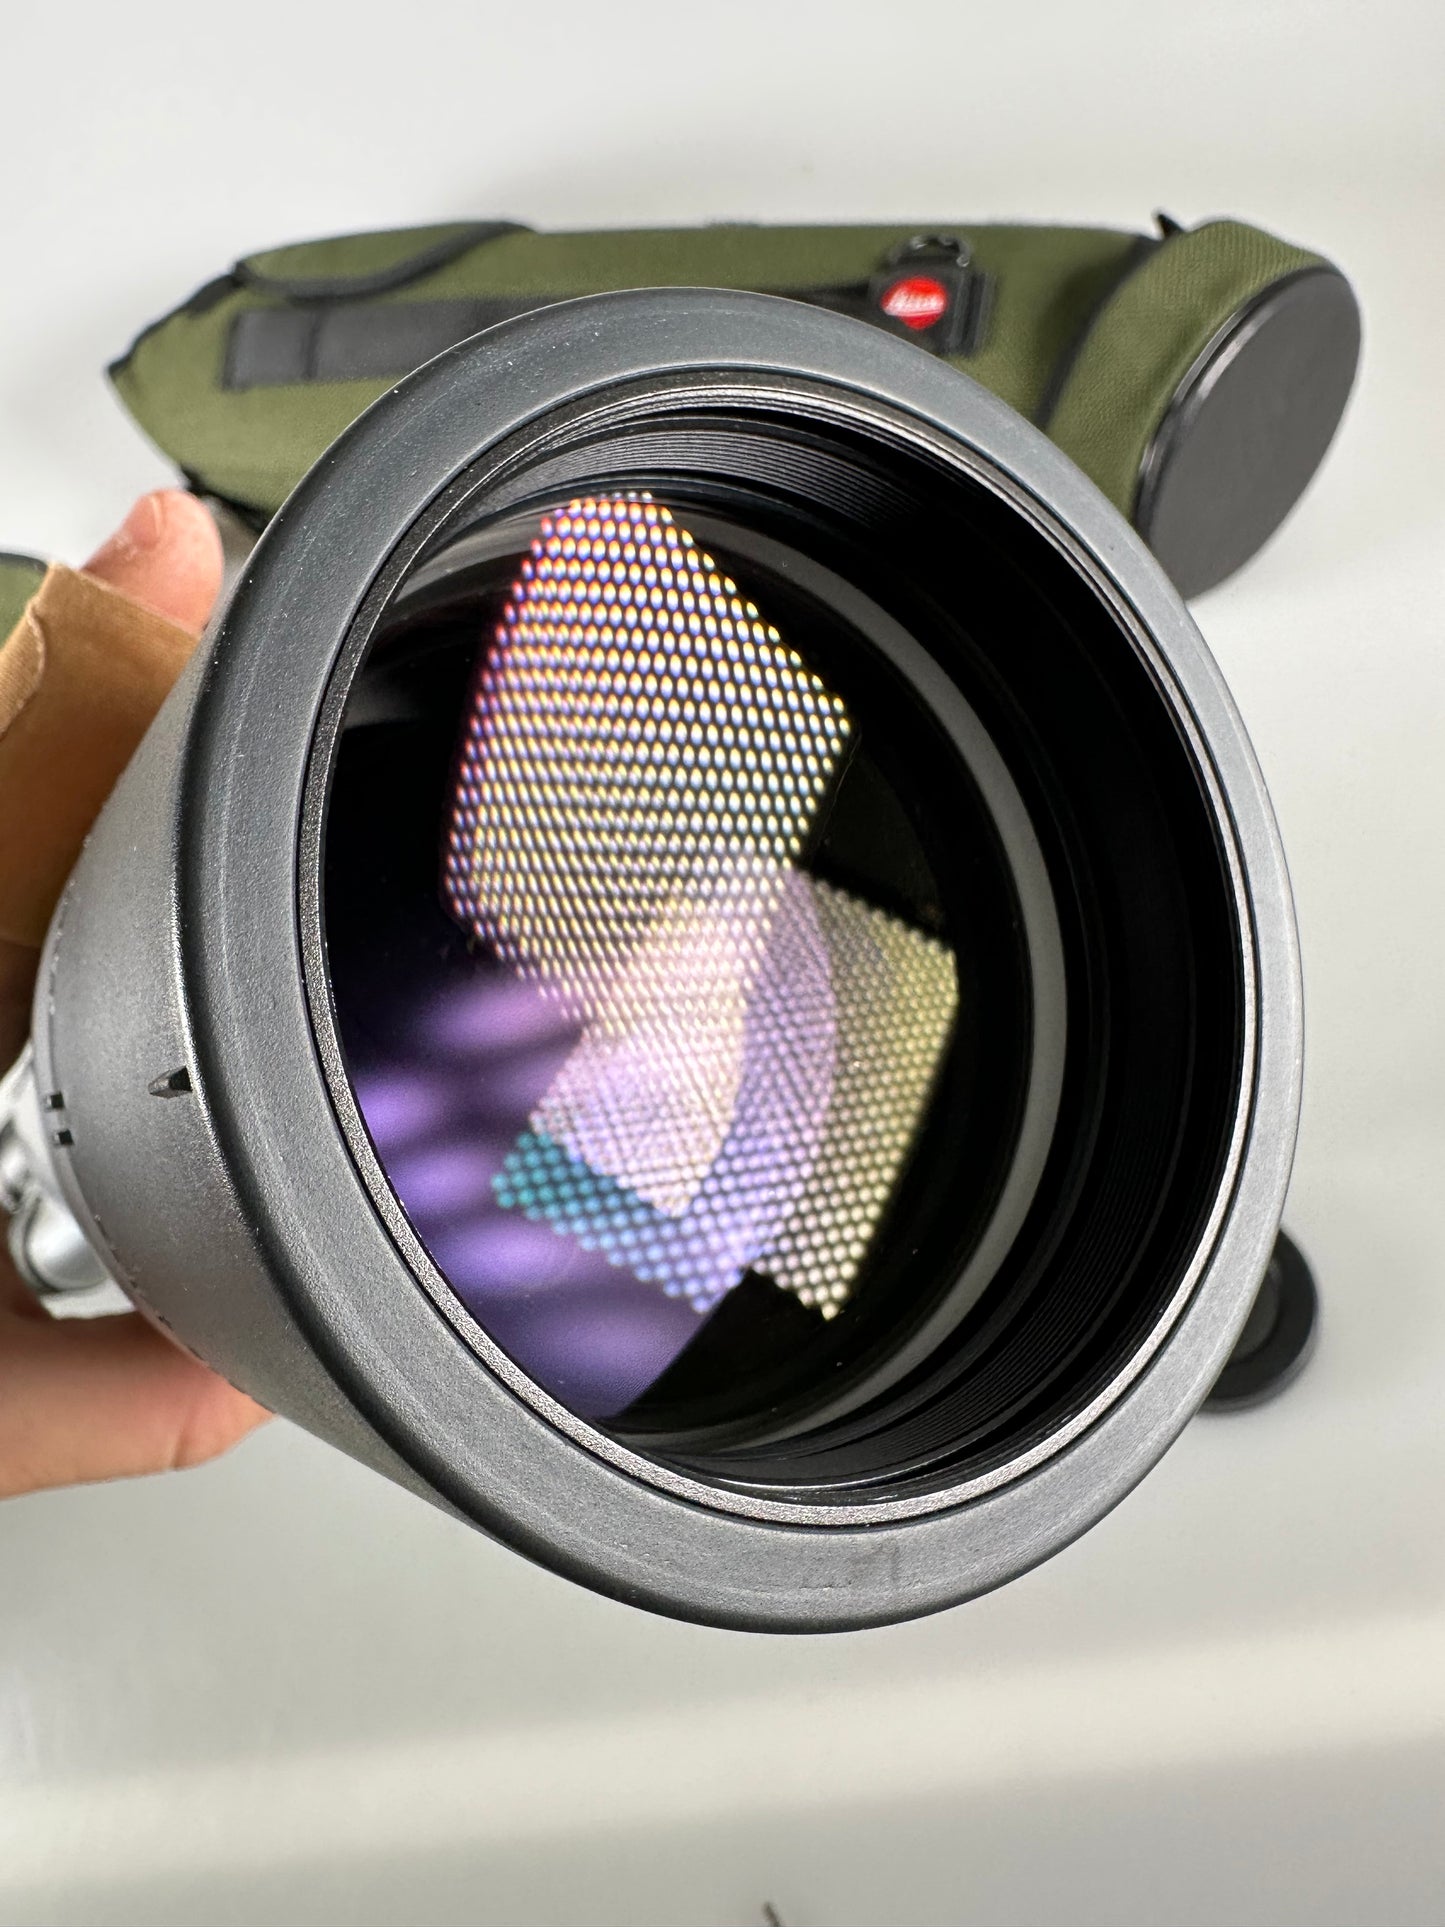 Leica APO Televid 77 spotting scope with case and B20x-60x eyepiece